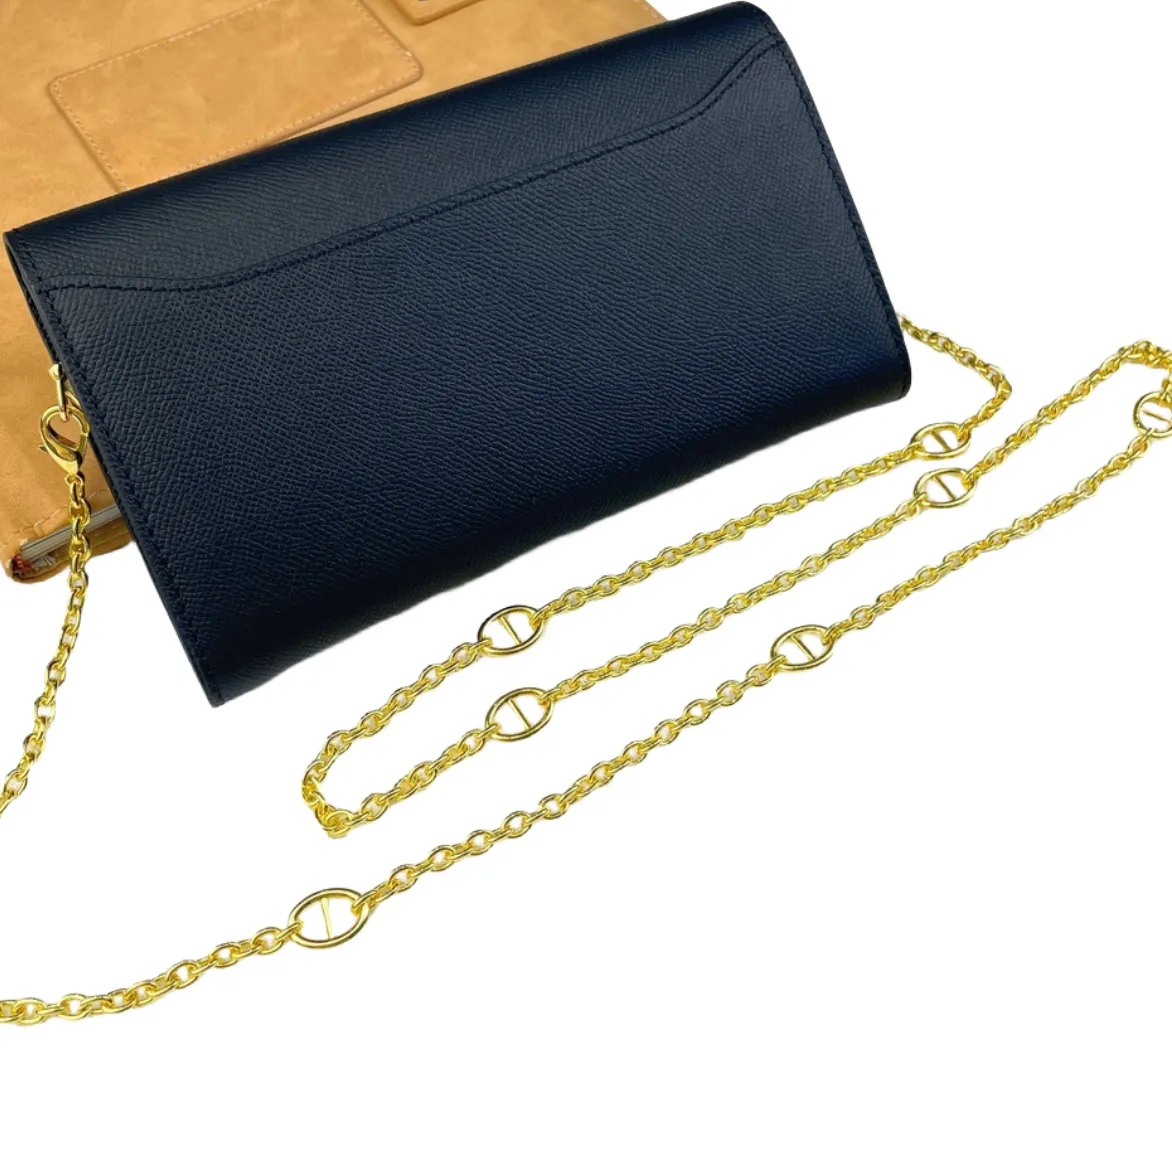 sac de designer sac fourre-tout sac à main pour femme femmes designers sac complet pochette épaule sac à main pour femme sacs de mode